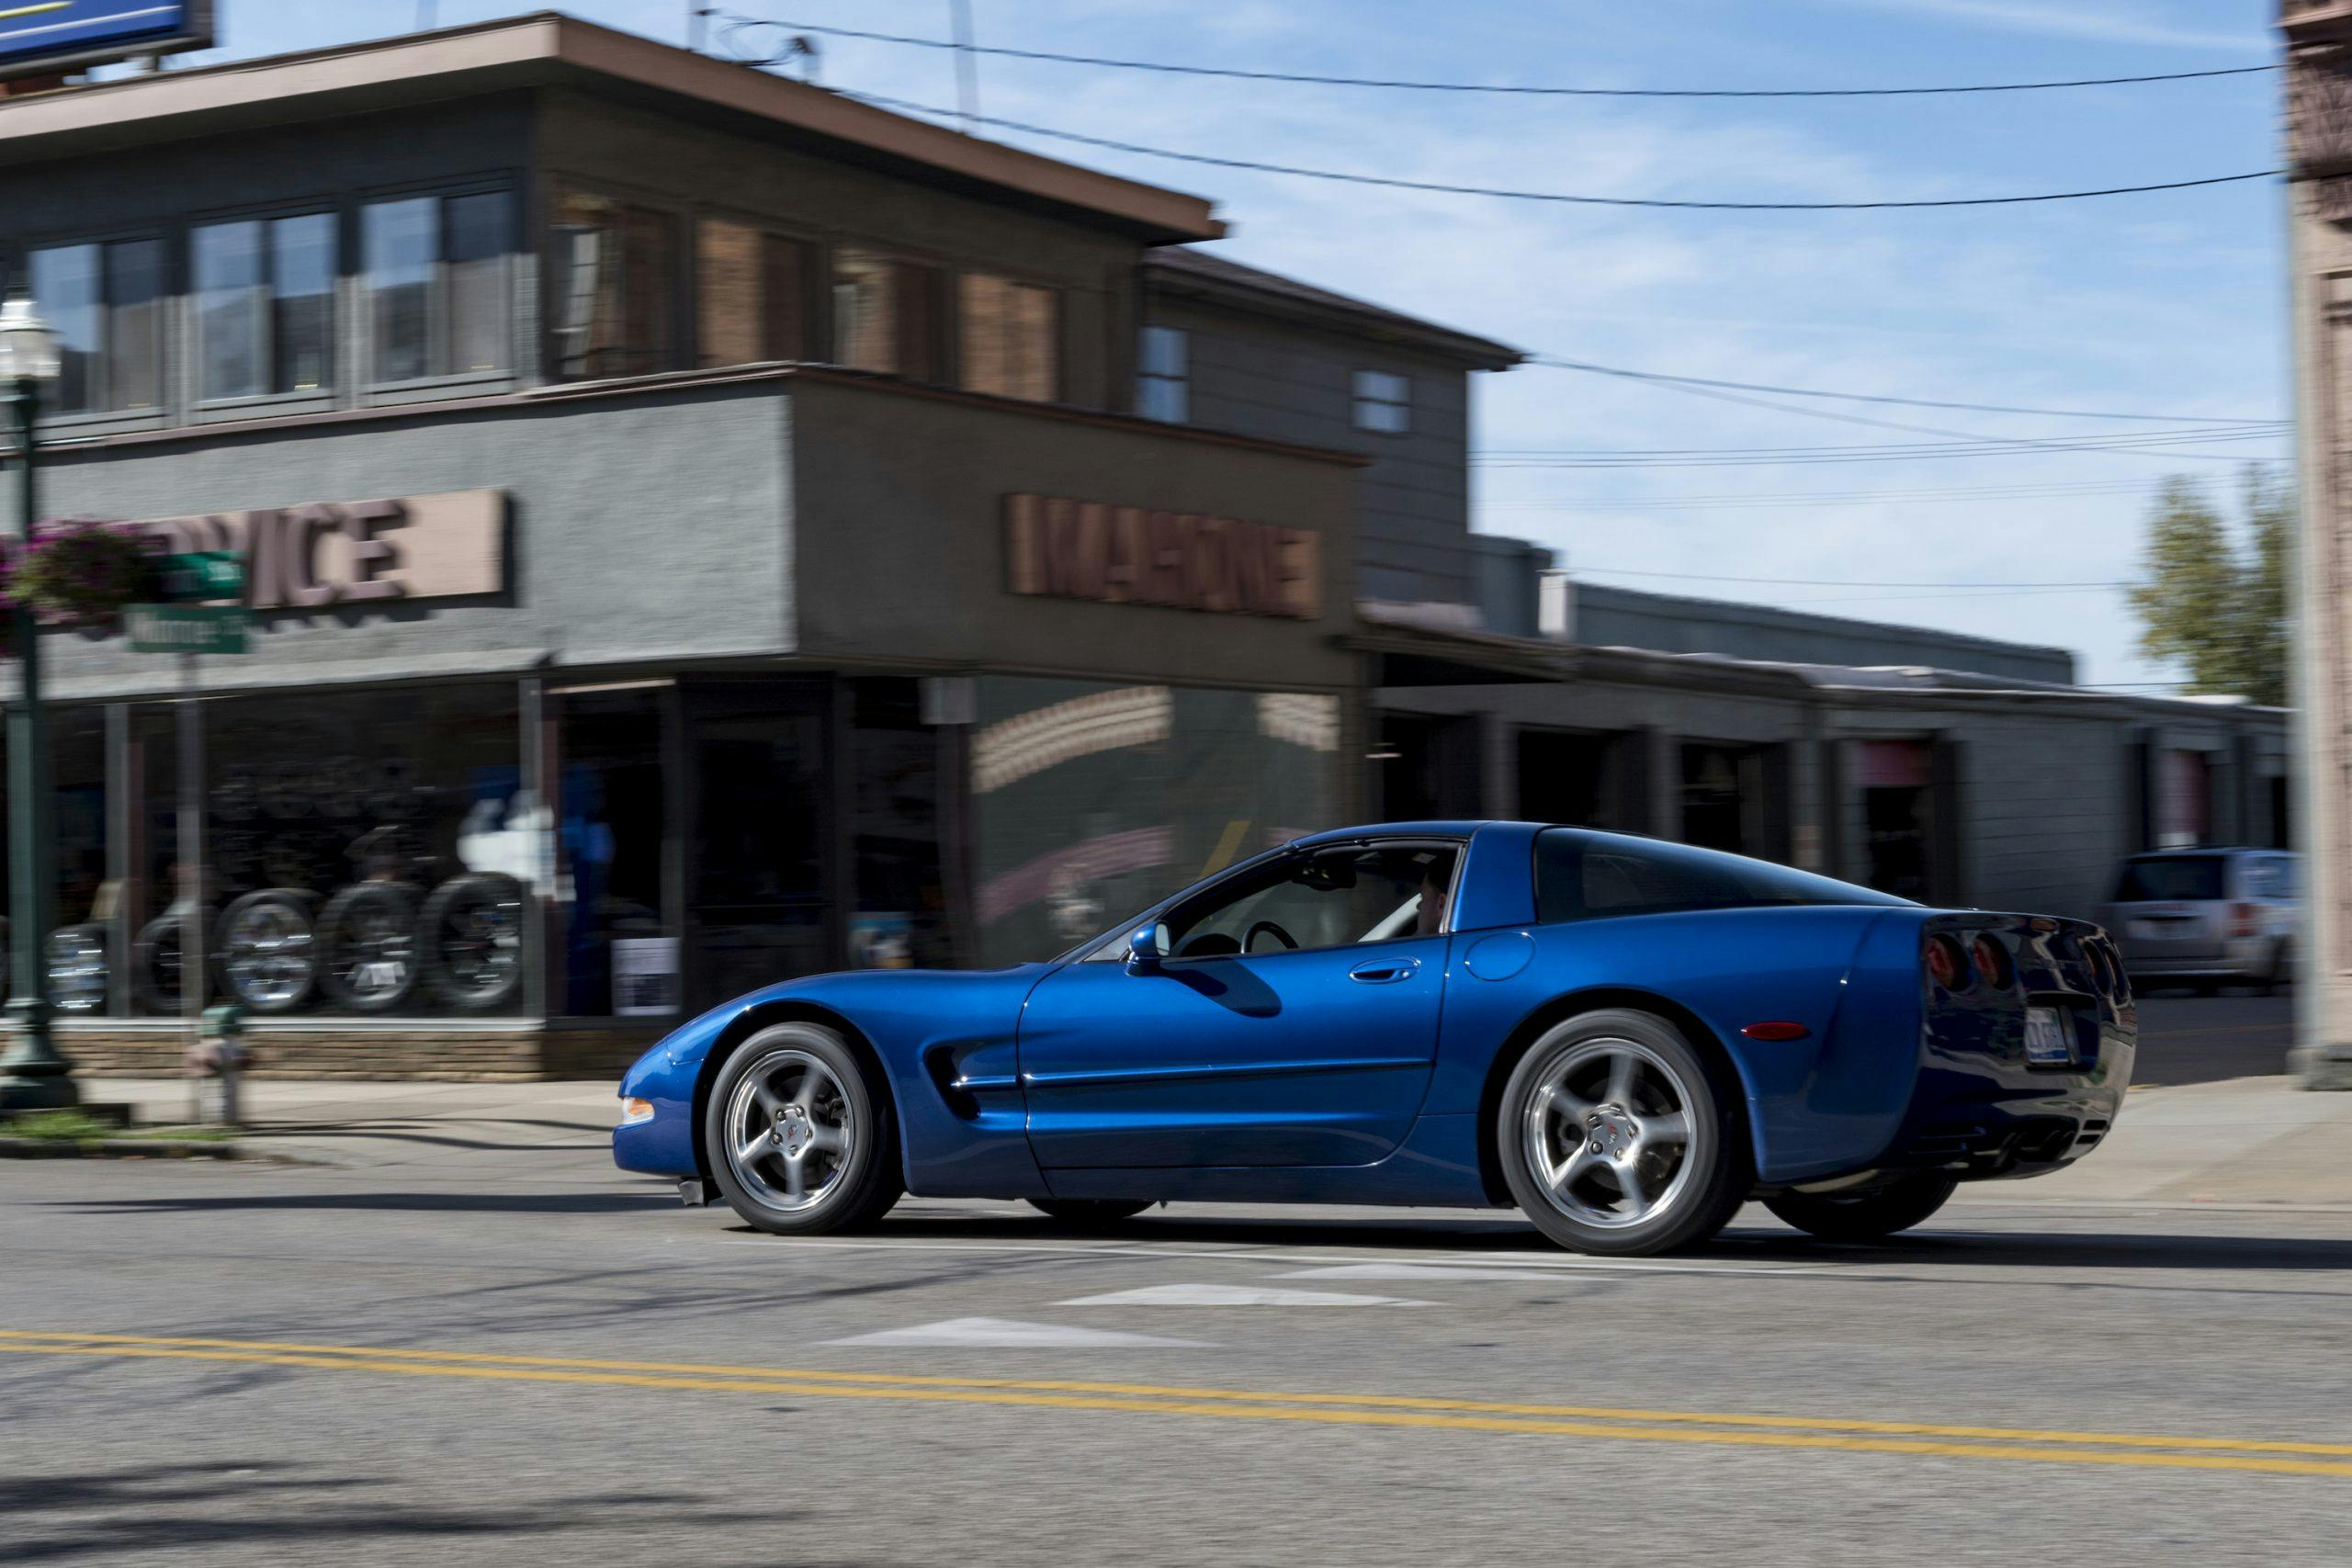 C5 Corvette Drives Passed Marietta Tire Shop